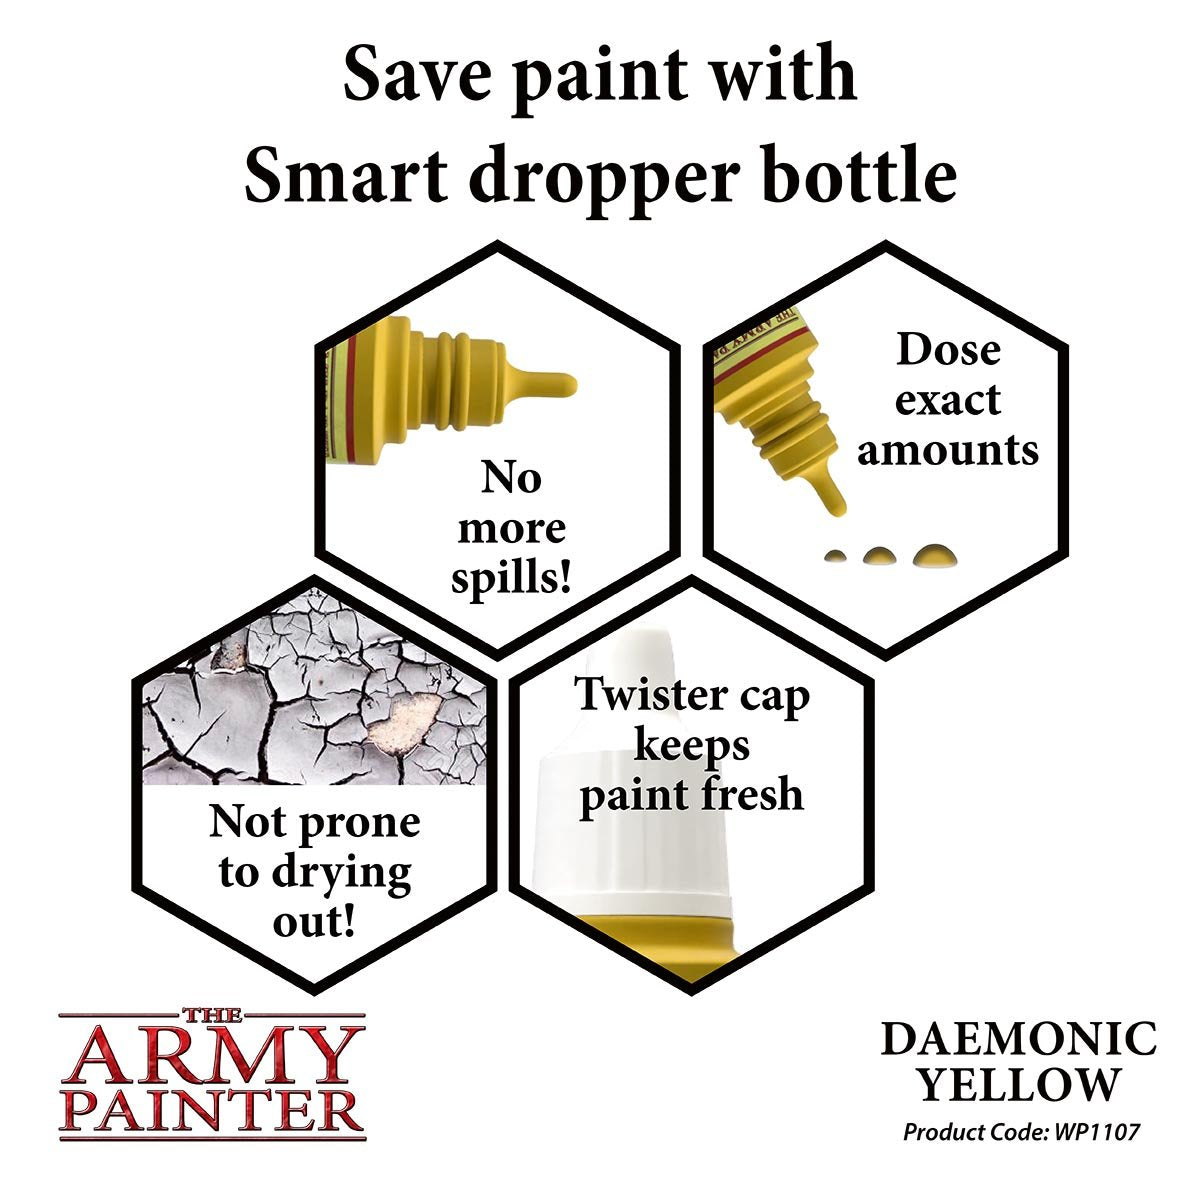 The Army Painter Warpaints WP1107 Daemonic Yellow Acrylic Paint 18ml bottle